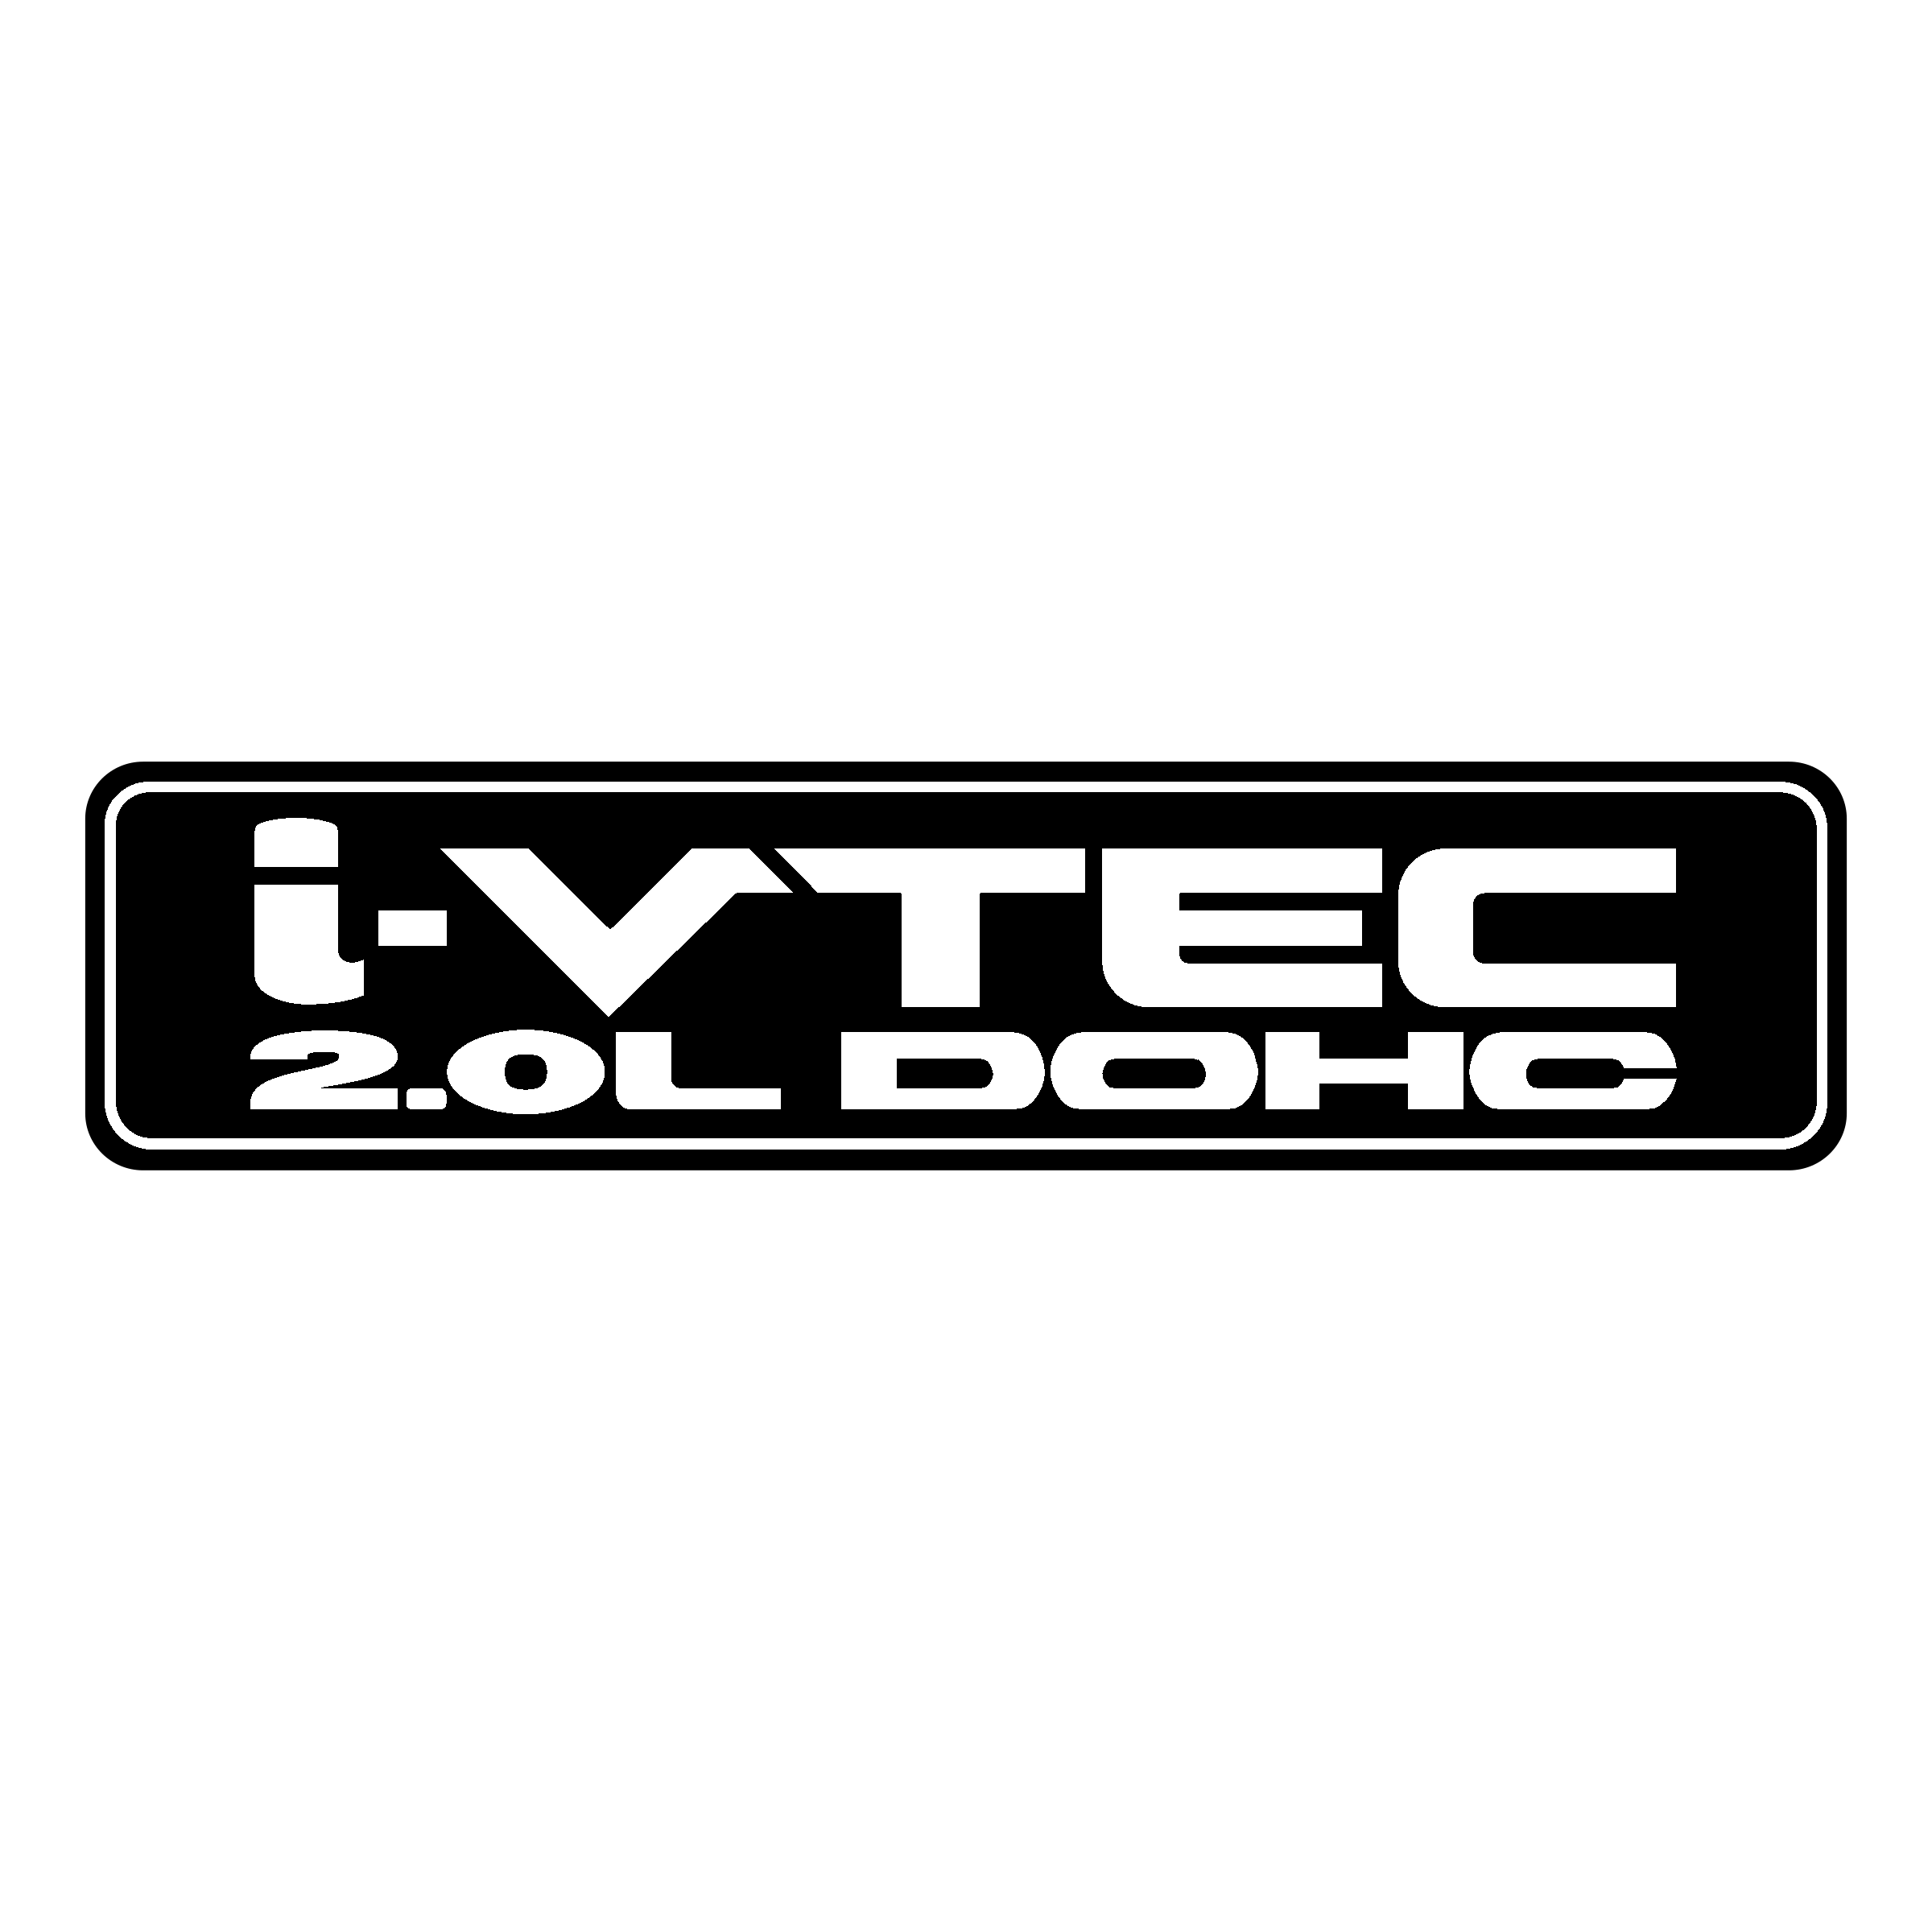 Vtec Logo - I Vtec 20l Dohc Logo PNG Transparent & SVG Vector - Freebie Supply